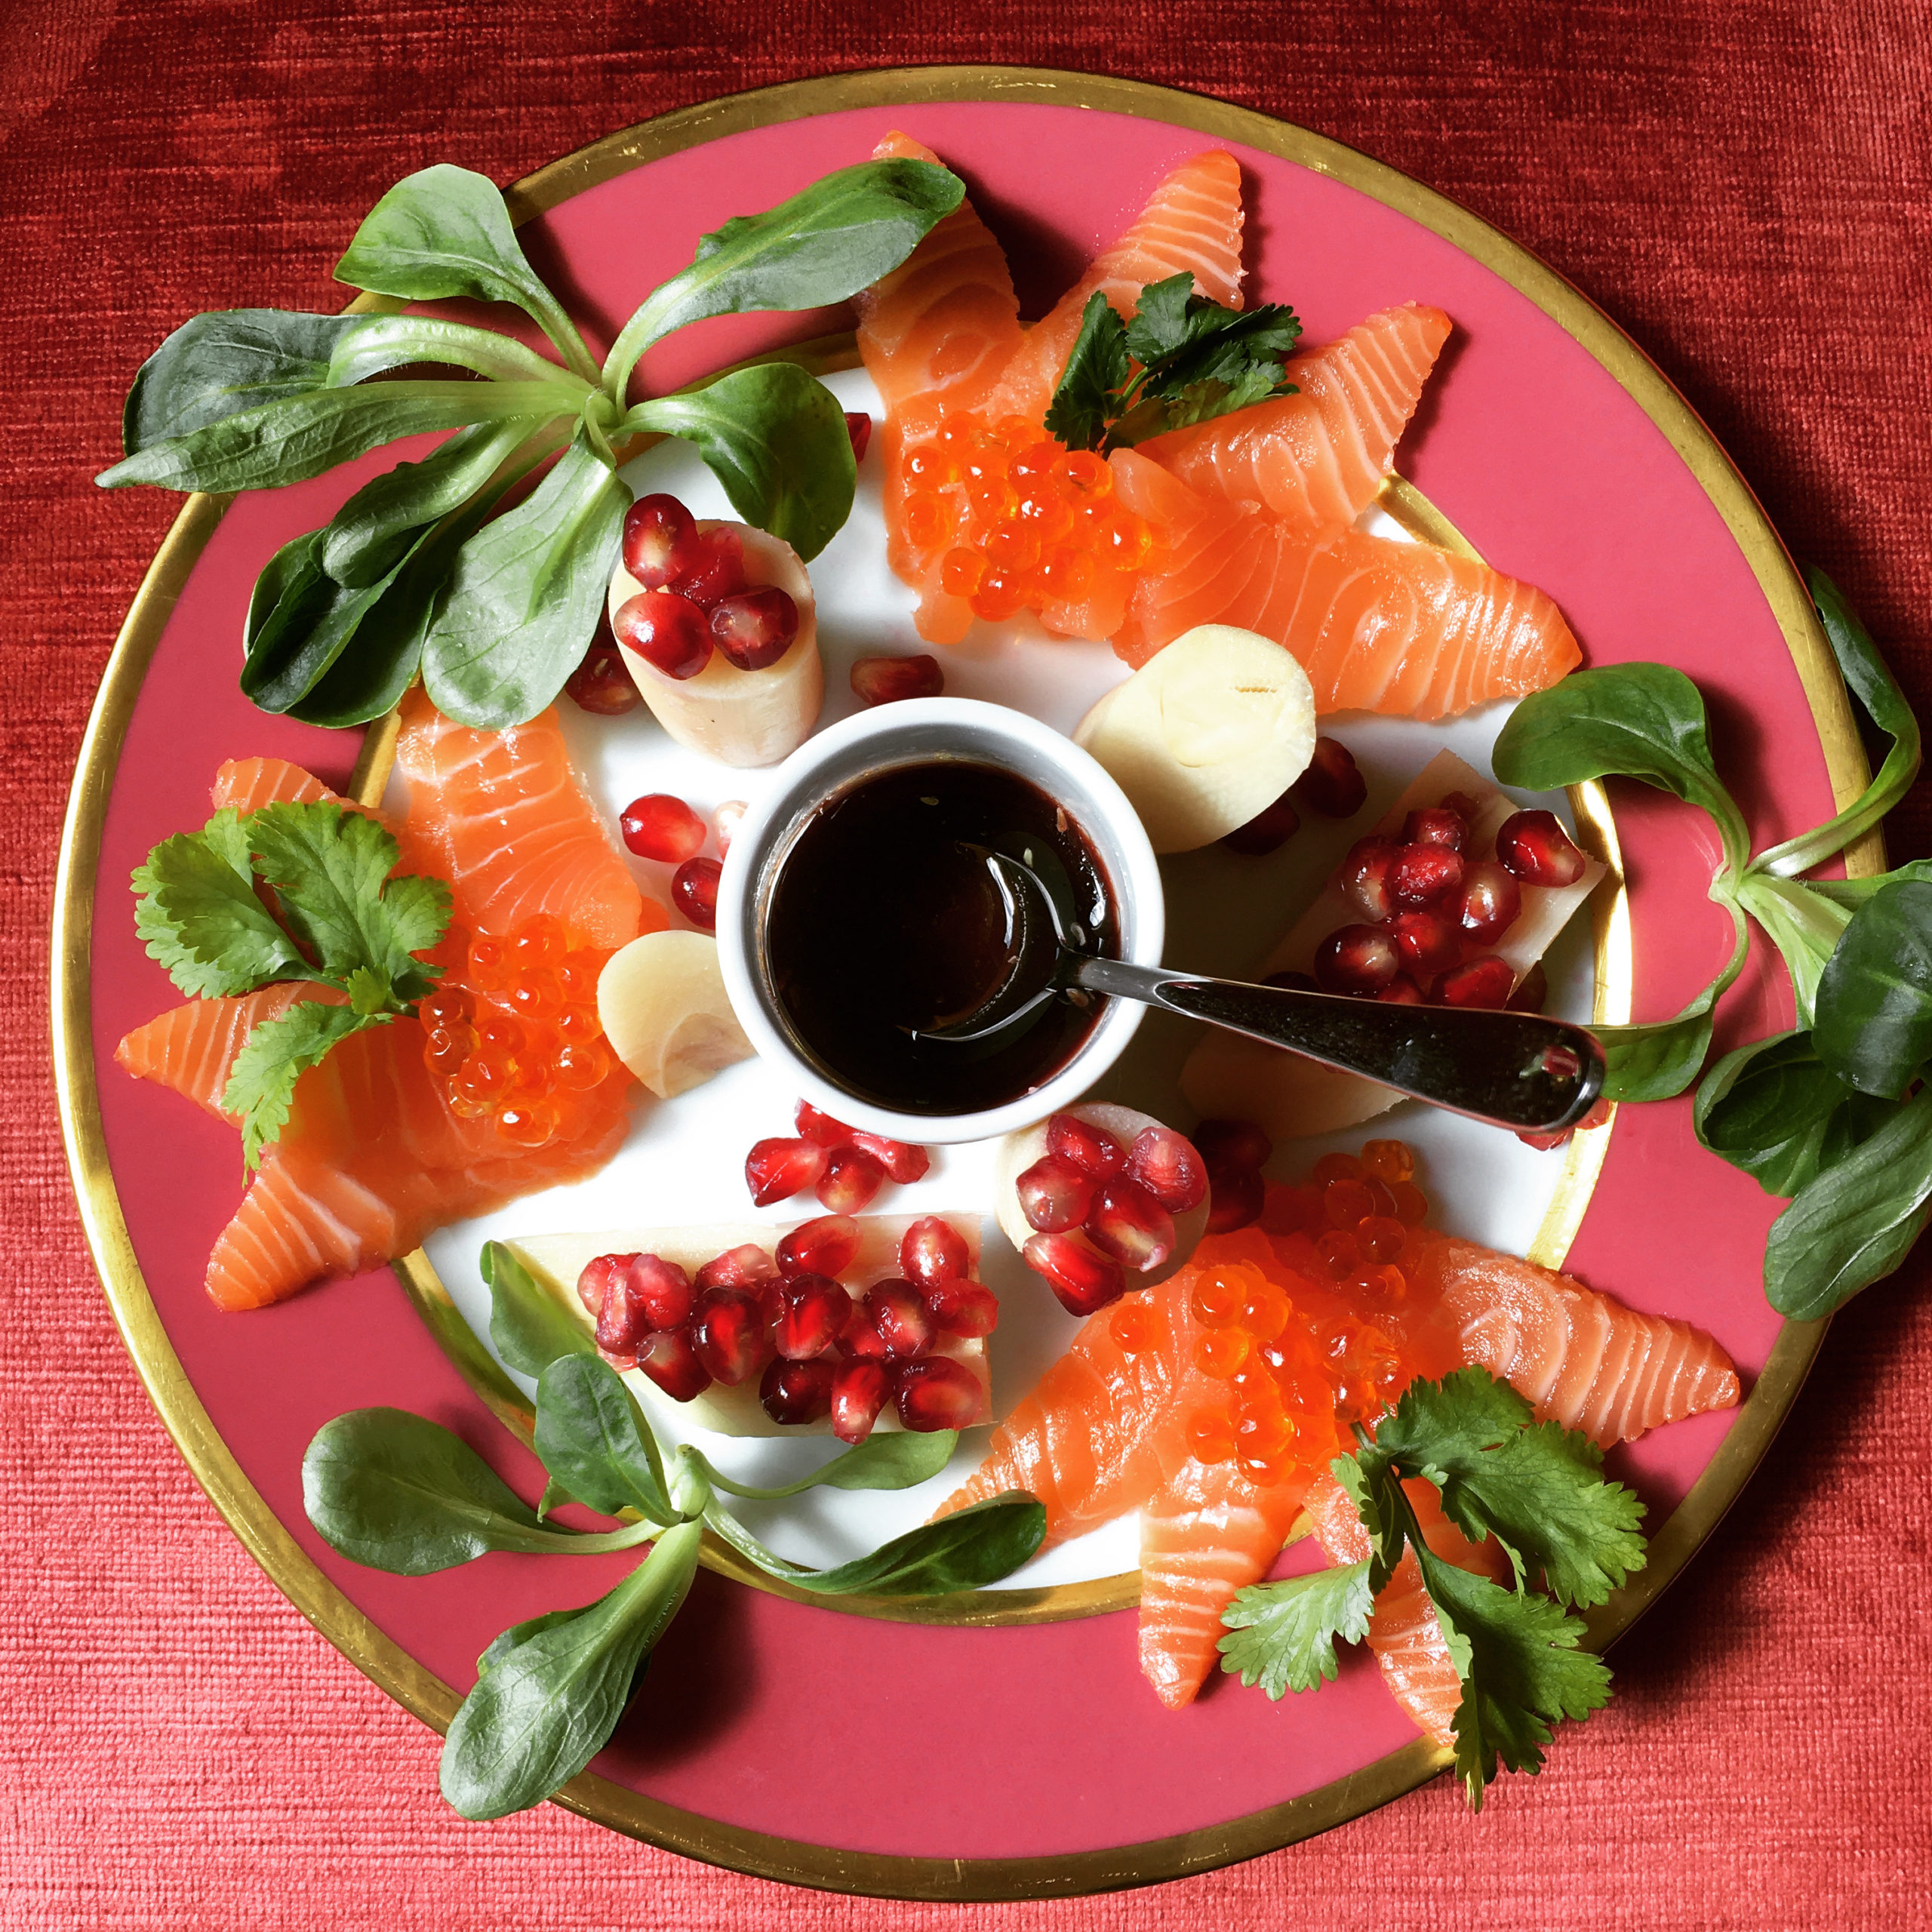 hearts-of-palm-salmon-sashimi-and-pomegranate